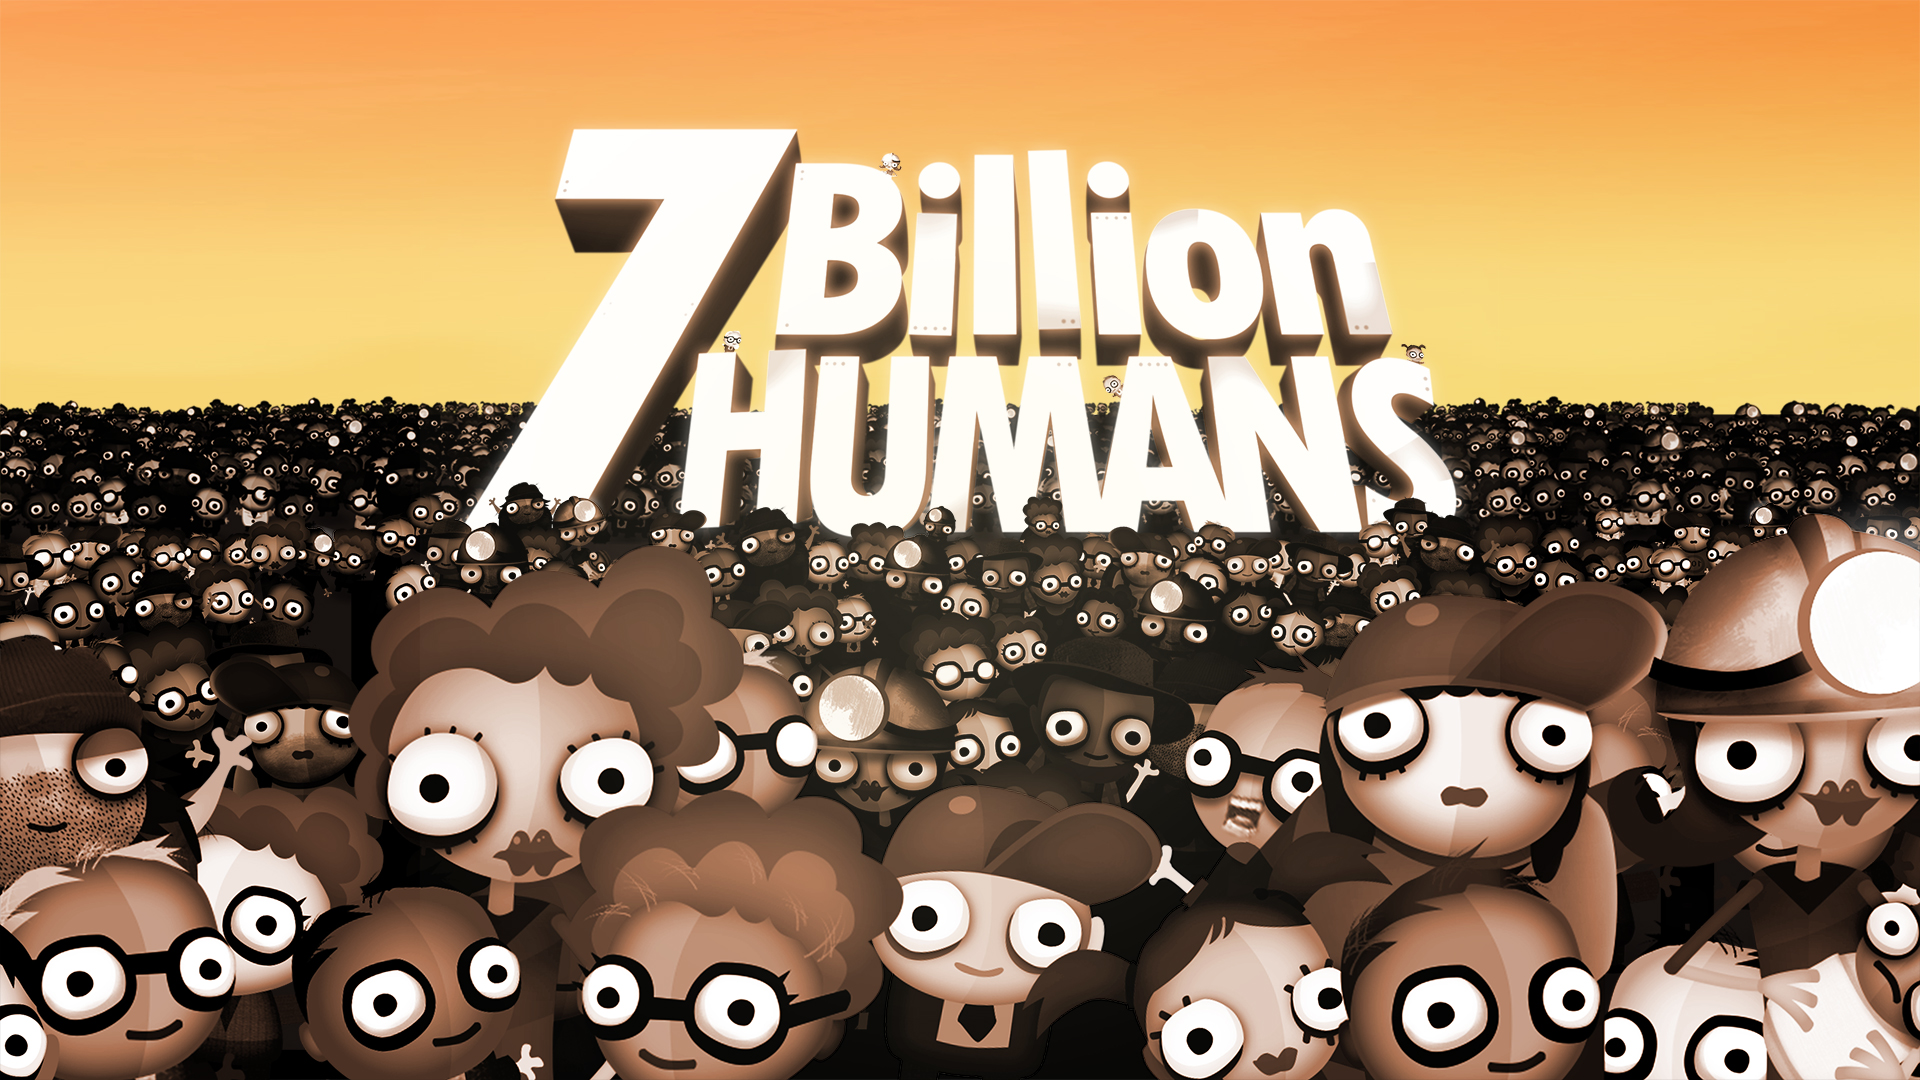 Mr billion. 7 Billion Humans.